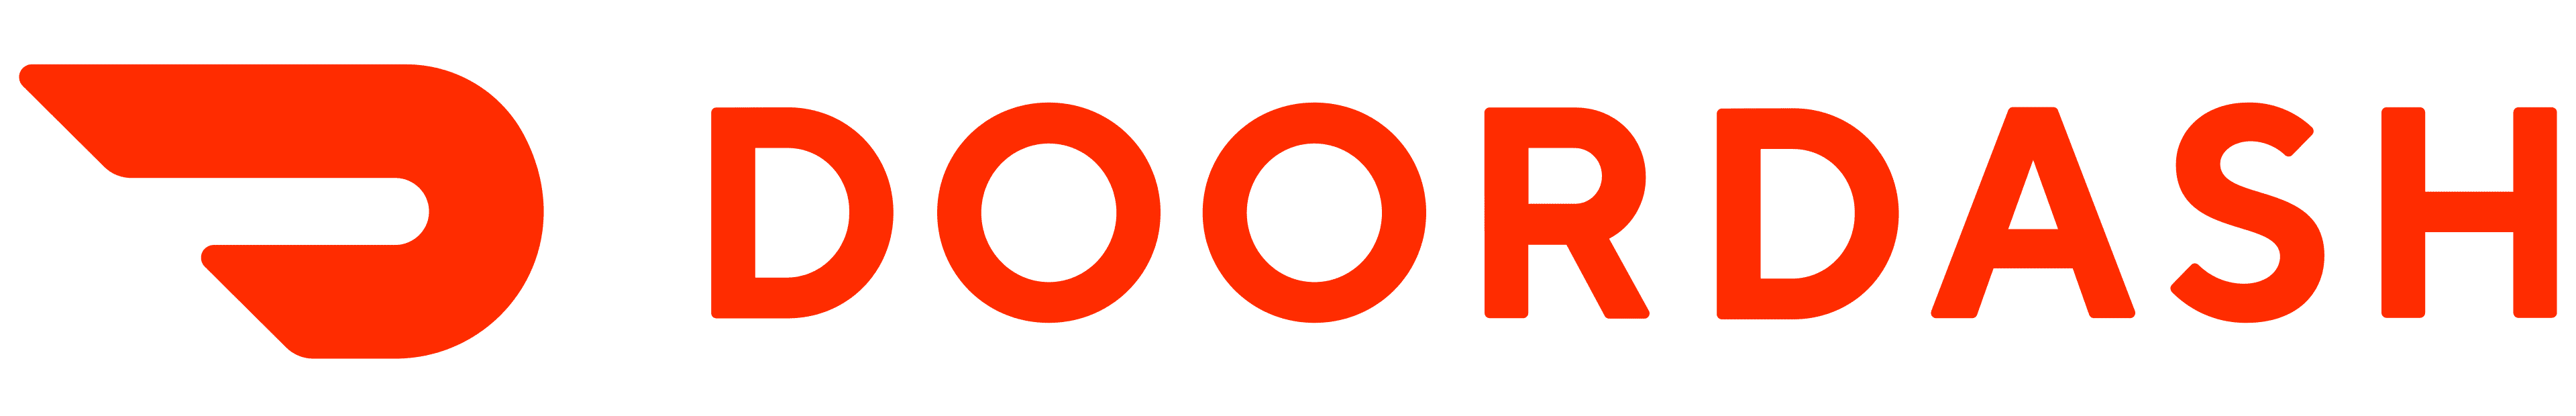 Doordash logo on a black background.